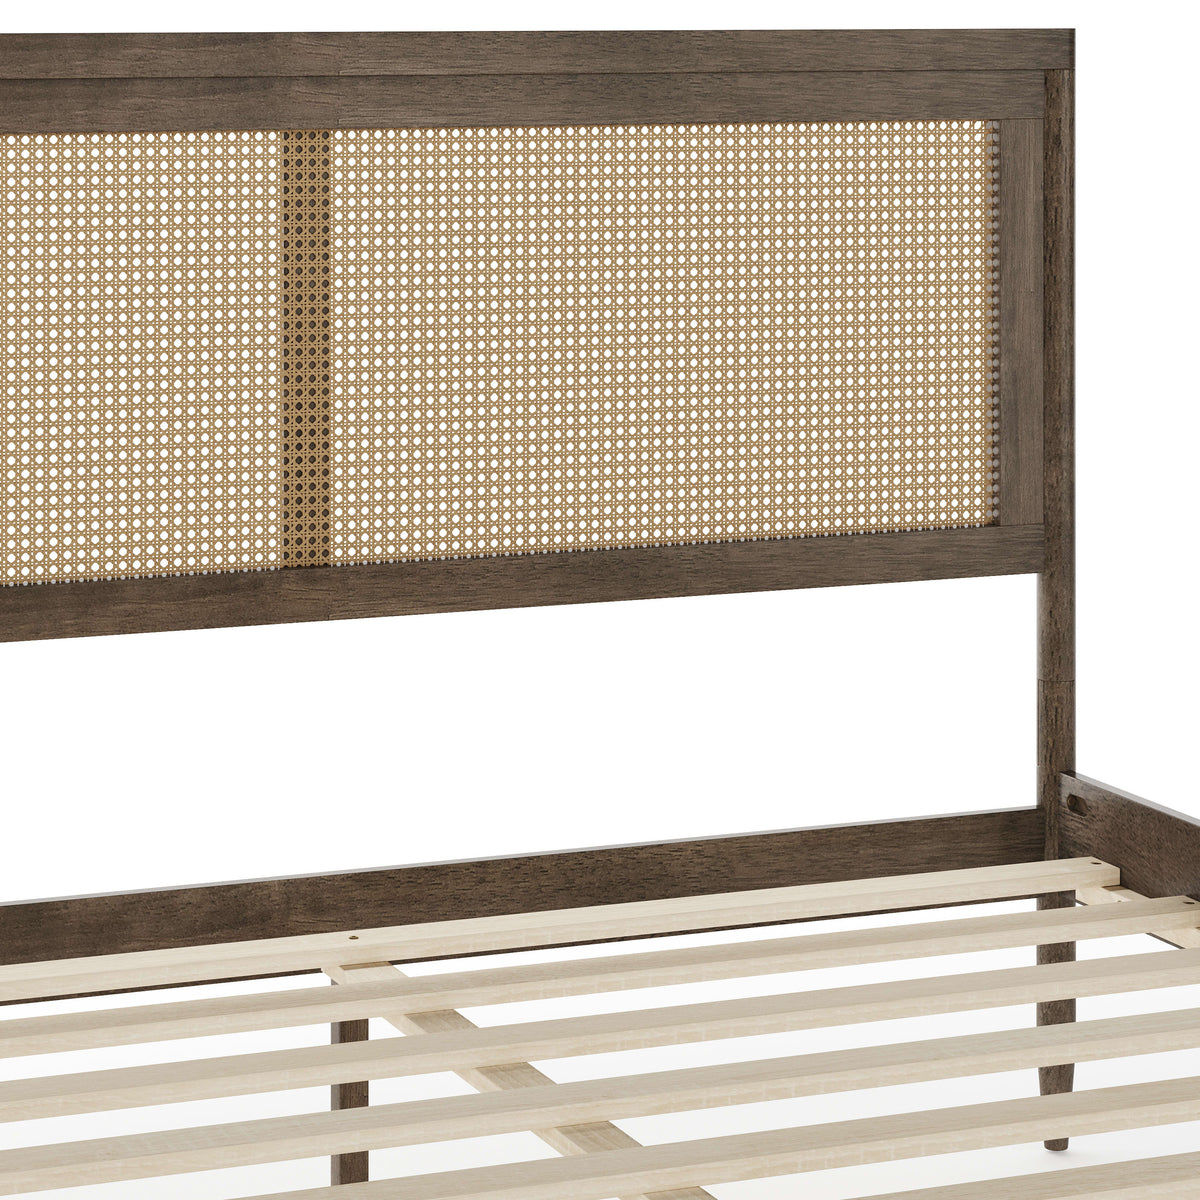 Brown Gray,Queen |#| Wooden Queen Platform Bed with Rattan Inset Headboard and Footboard-Brown Gray